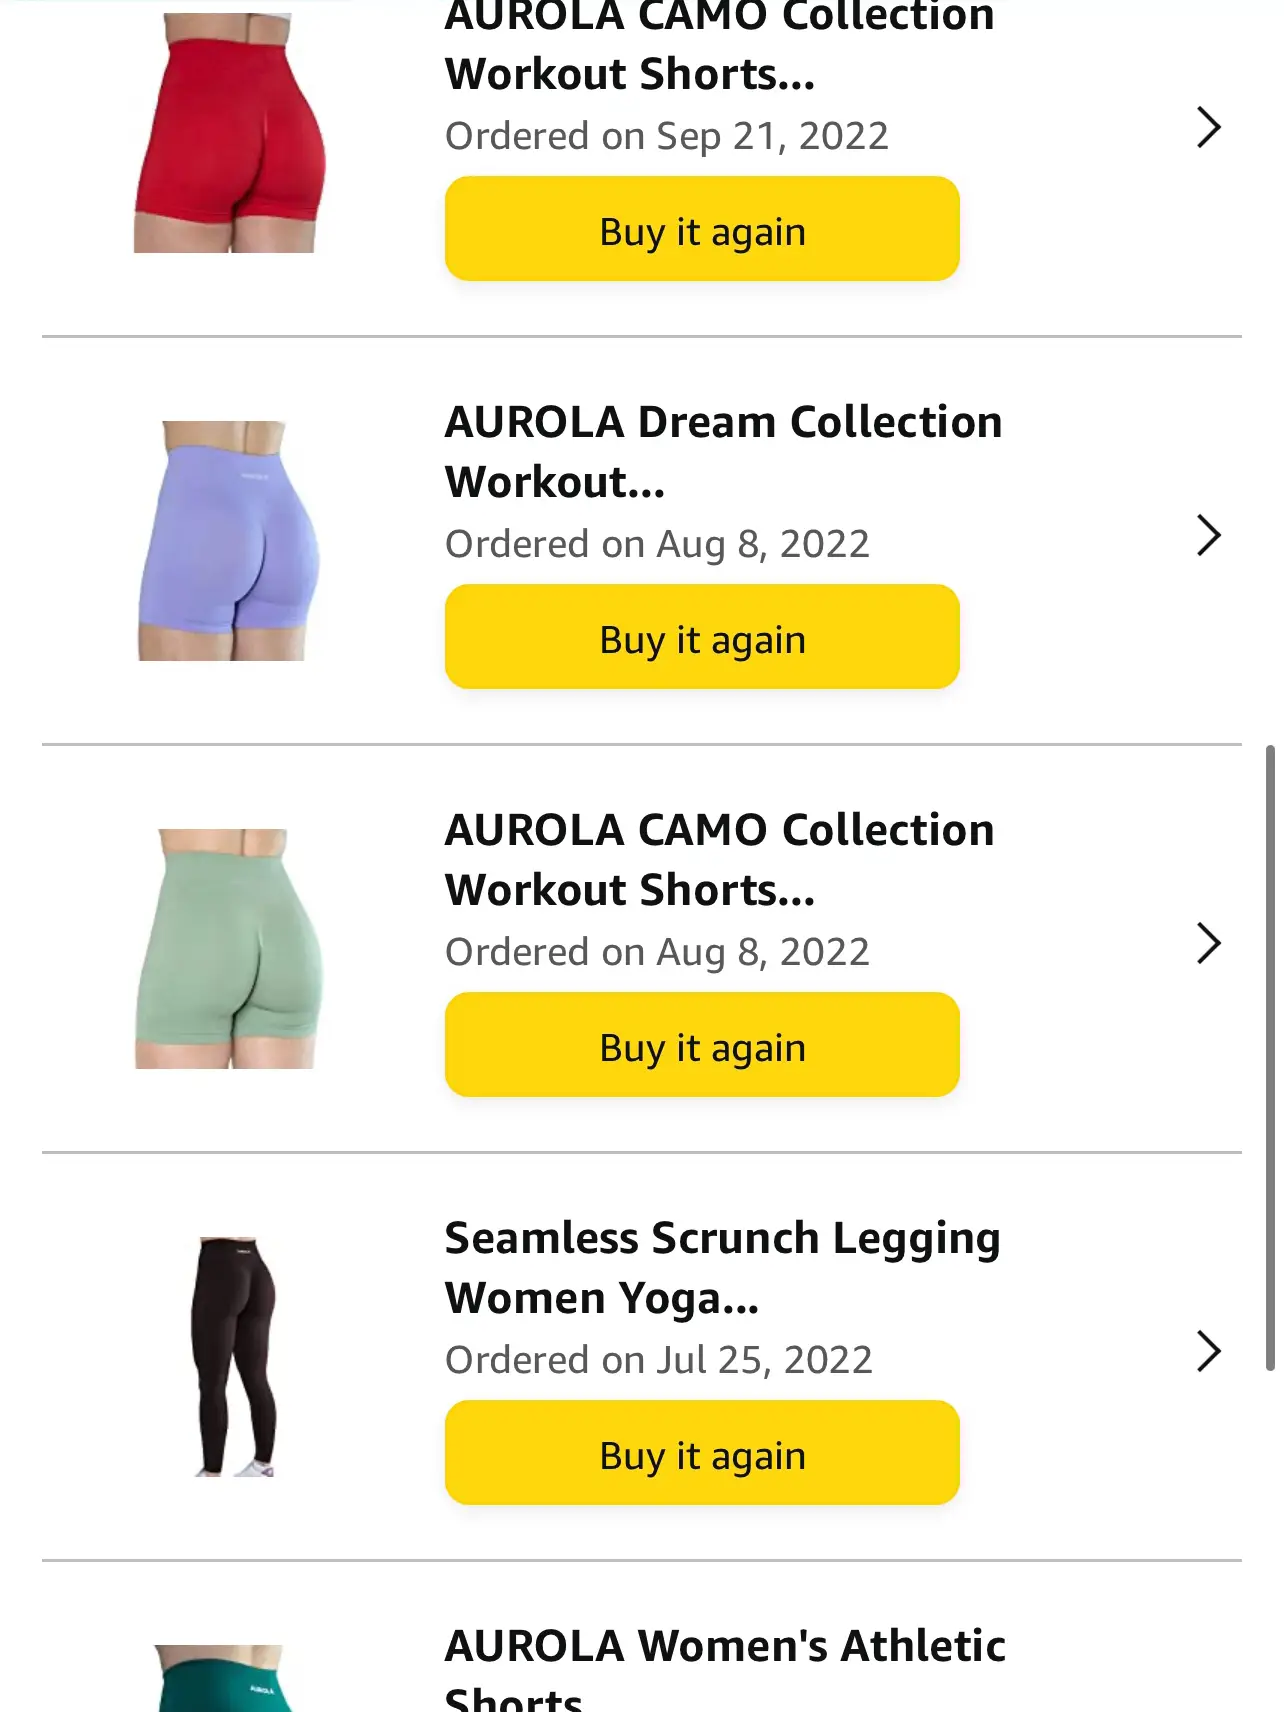 AUROLA CAMO Collection Shorts, AUROLA